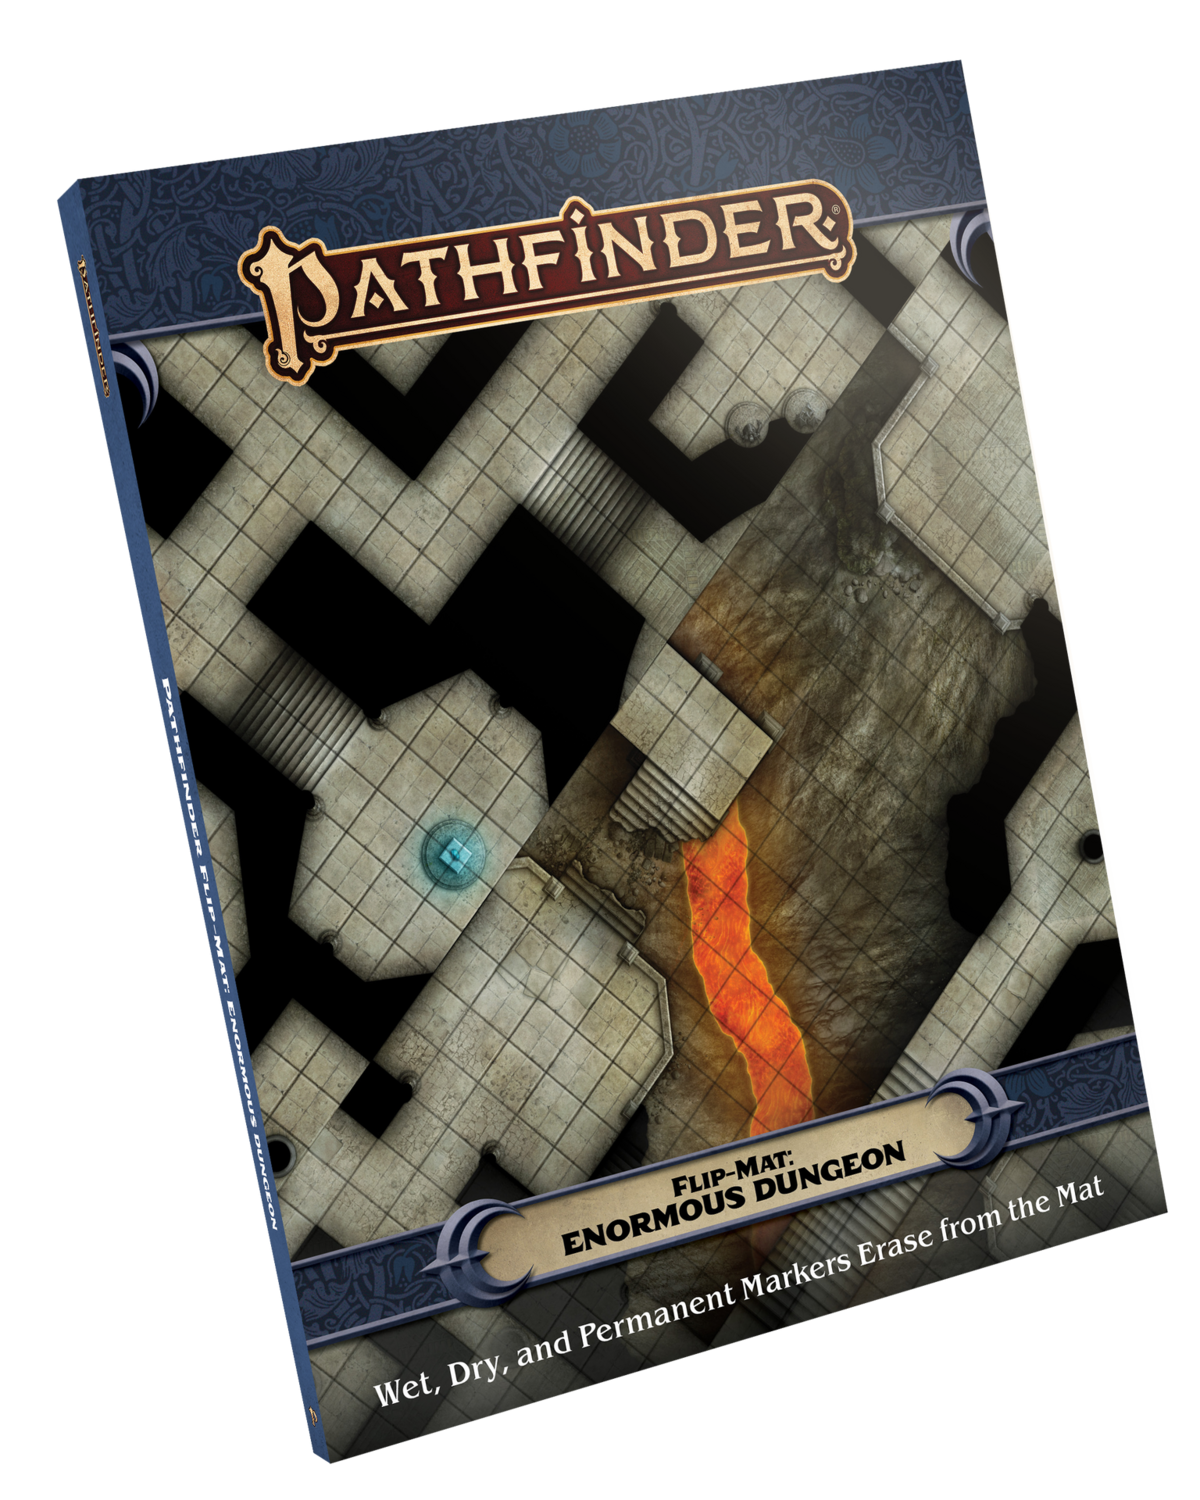 Pathfinder RPG: (Flip-Mat) Enormous Dungeon